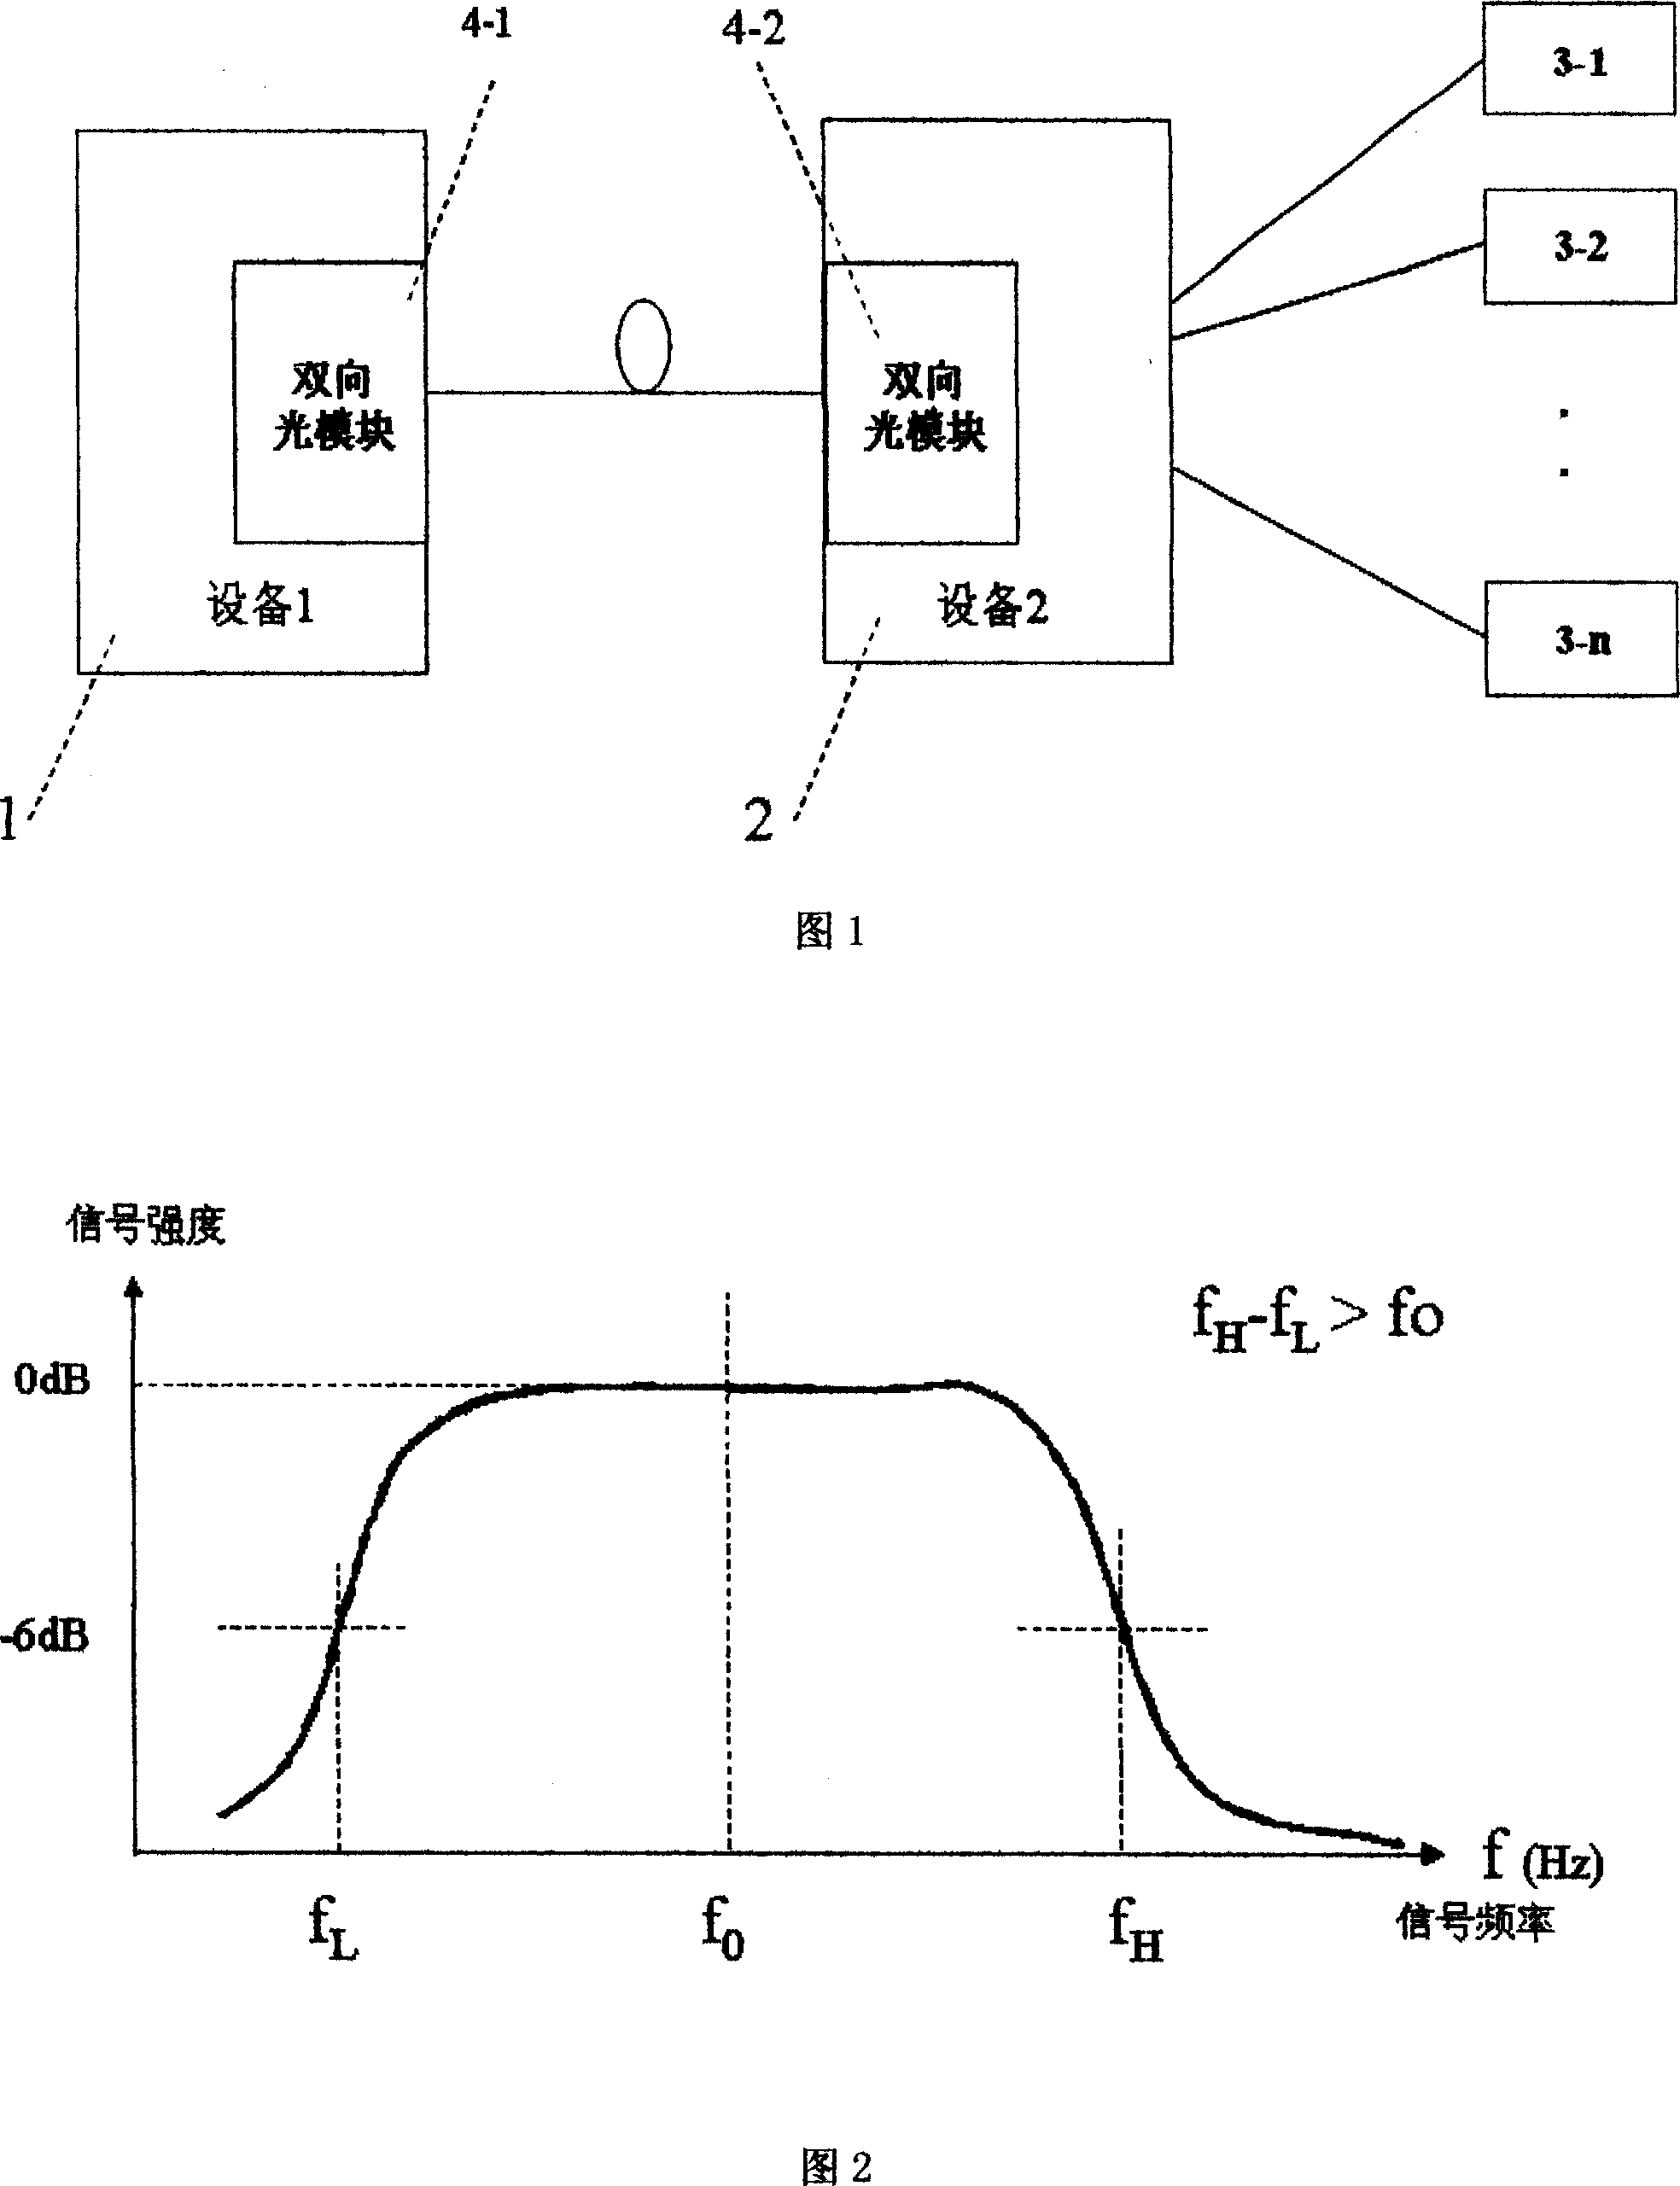 Analog two-way transmission optical module